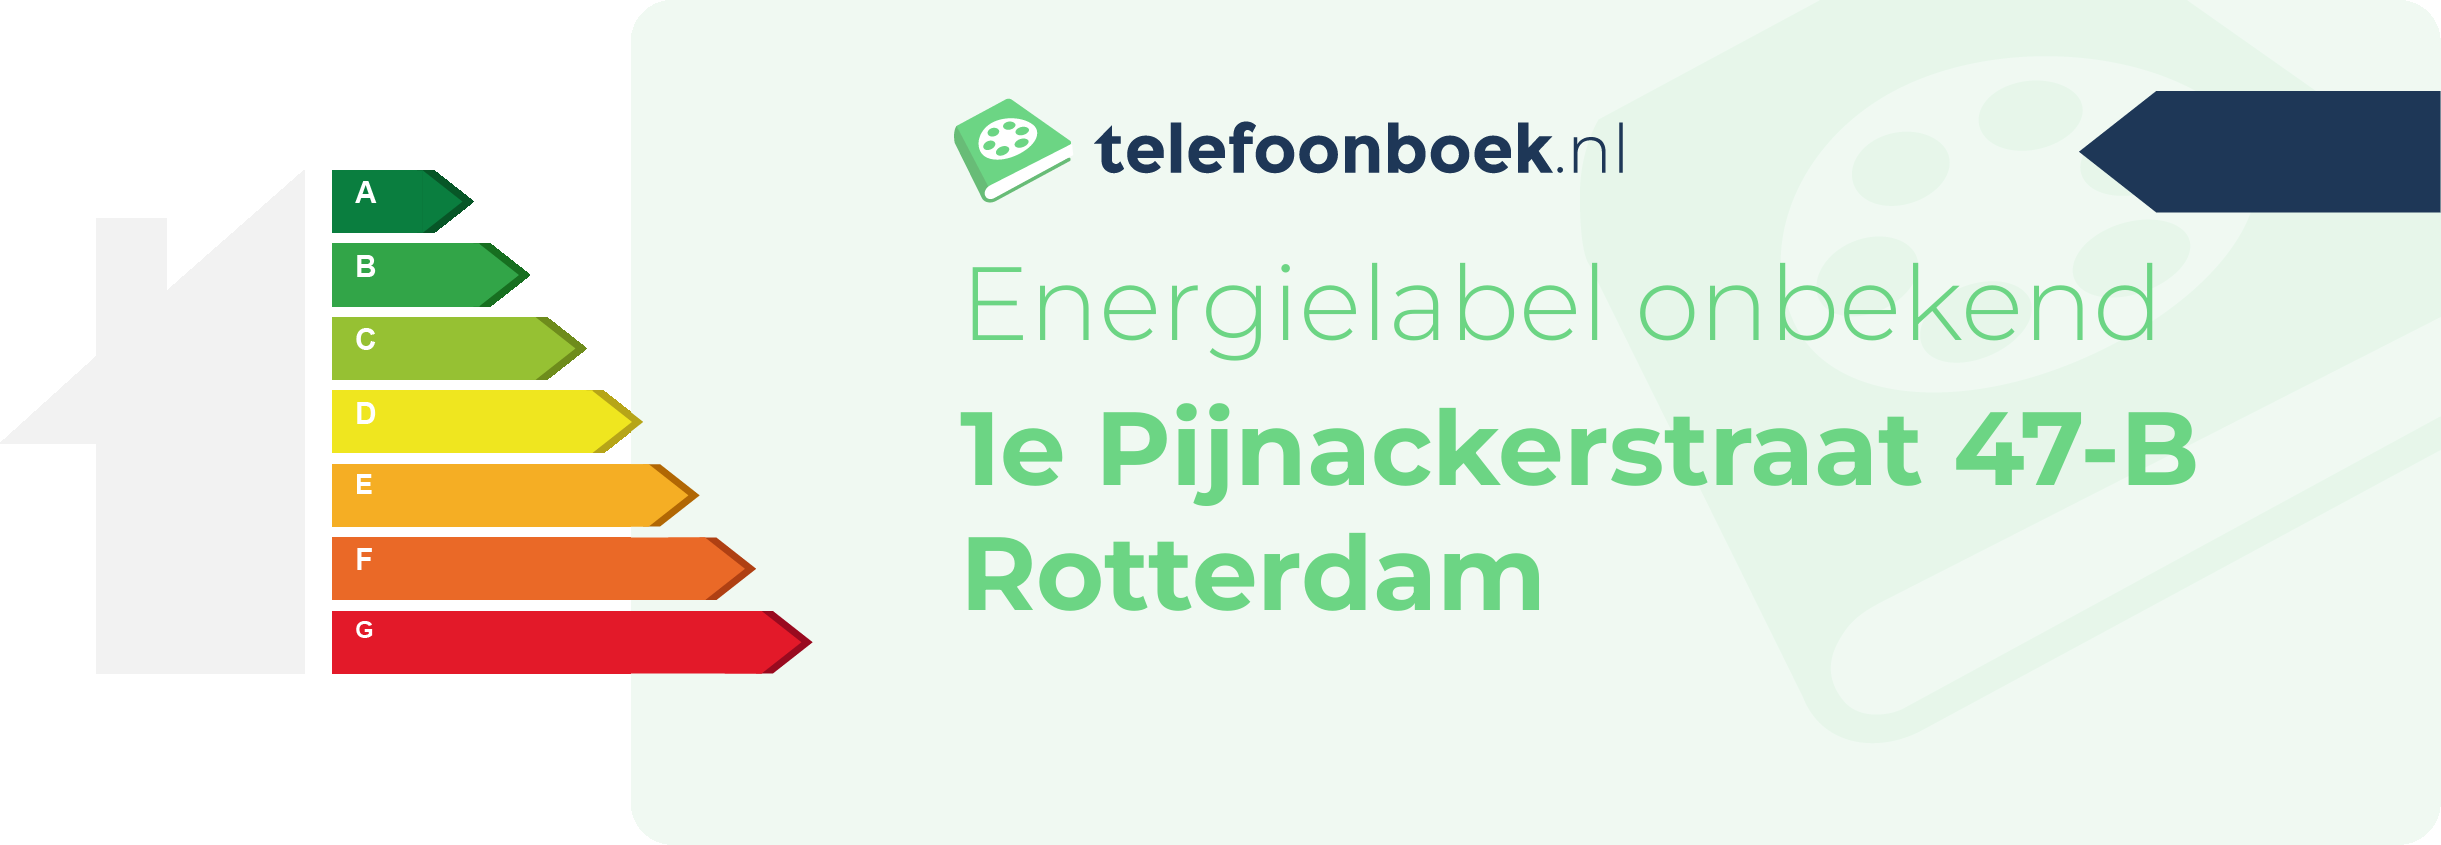 Energielabel 1e Pijnackerstraat 47-B Rotterdam